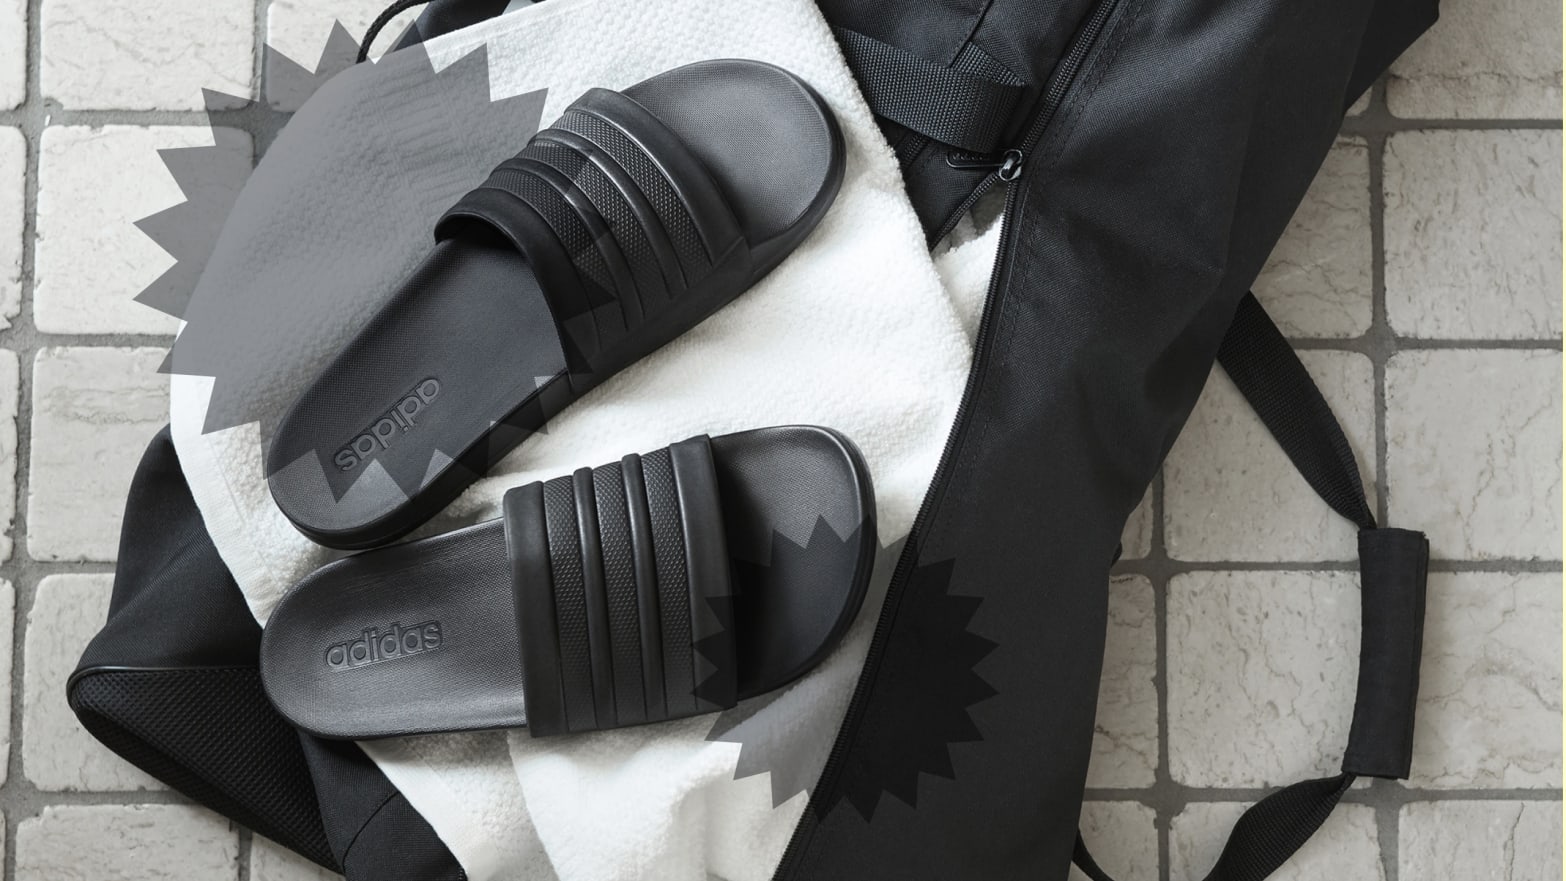 Adidas Adilette Comfort Slides Review